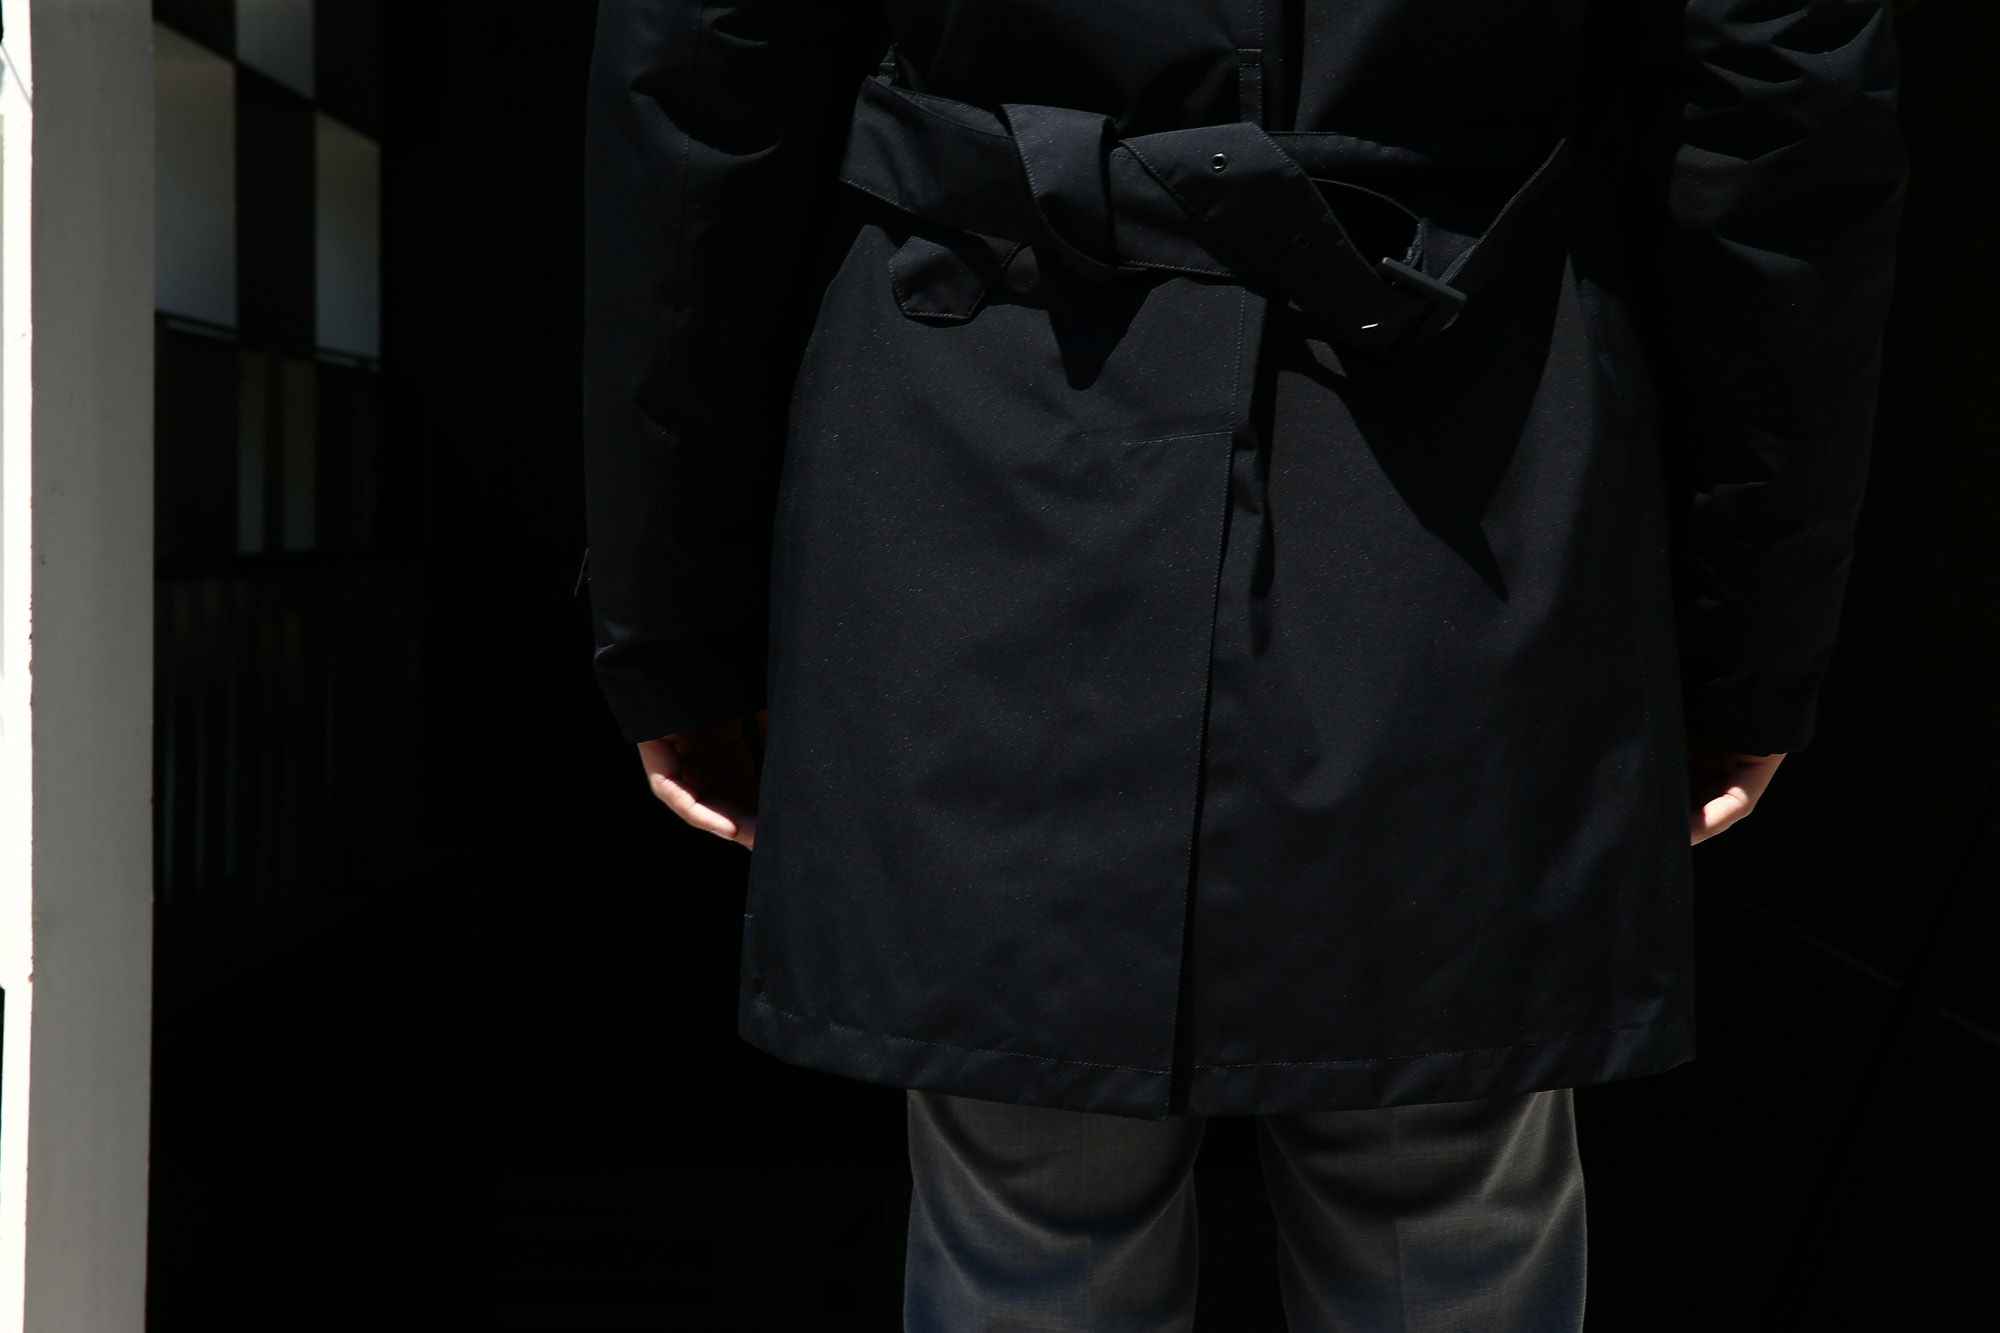 HERNO(ヘルノ) PI077UL LAMINAR Belted coat (ラミナー ベルテッドコート) GORE-TEX (ゴアテックス) 完全防水 ステンカラー シングル ベルテッドコート BLACK (ブラック・9300) 2017 秋冬 愛知 名古屋 herno ヘルノ ダウンコート 42,44,46,48,50,52,54